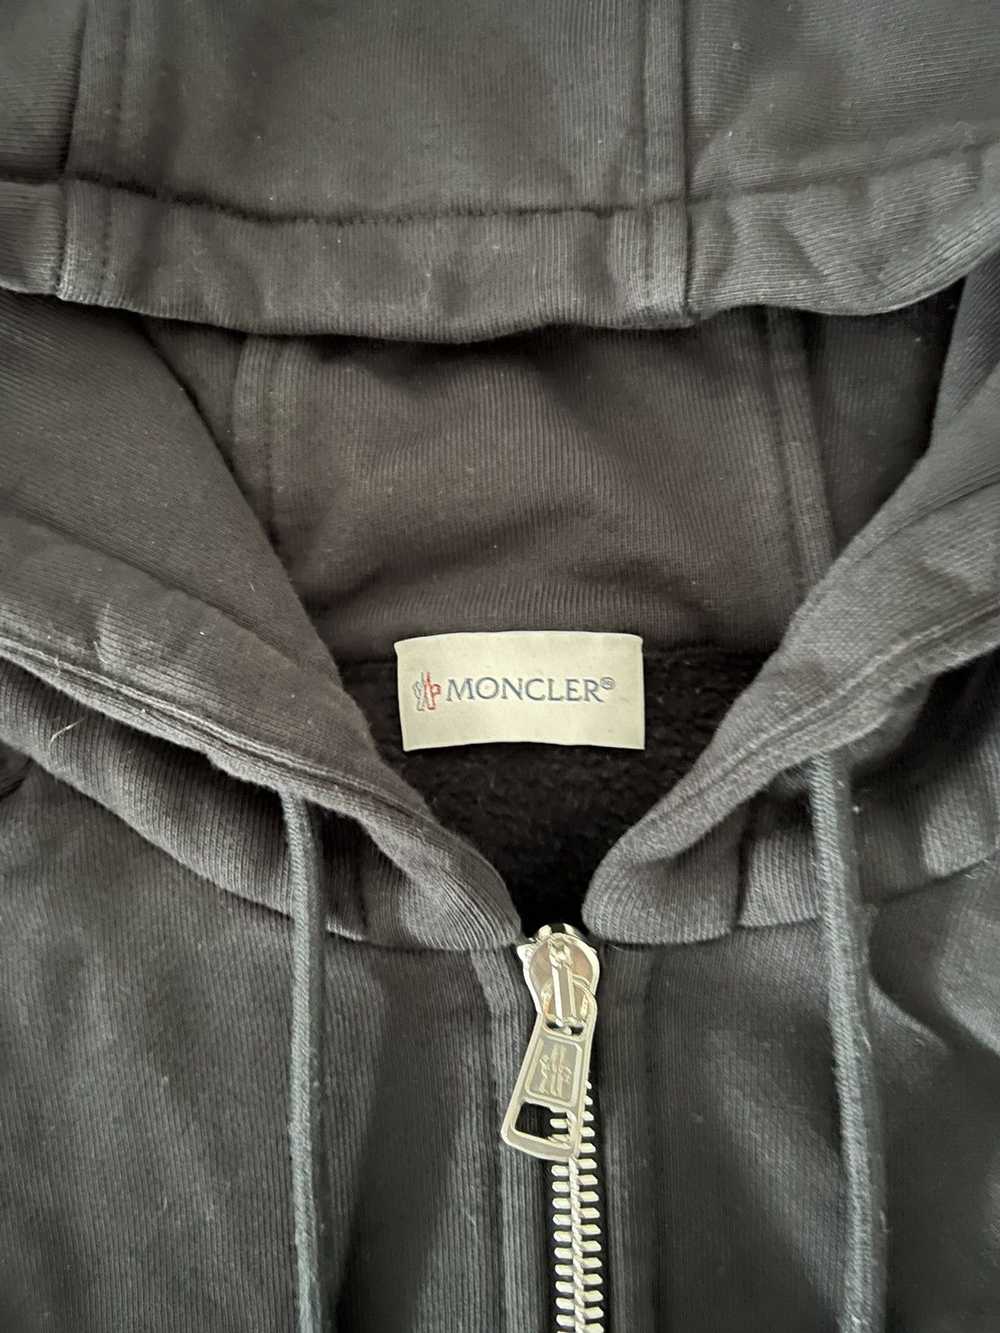 Moncler Black moncler zip up - image 2